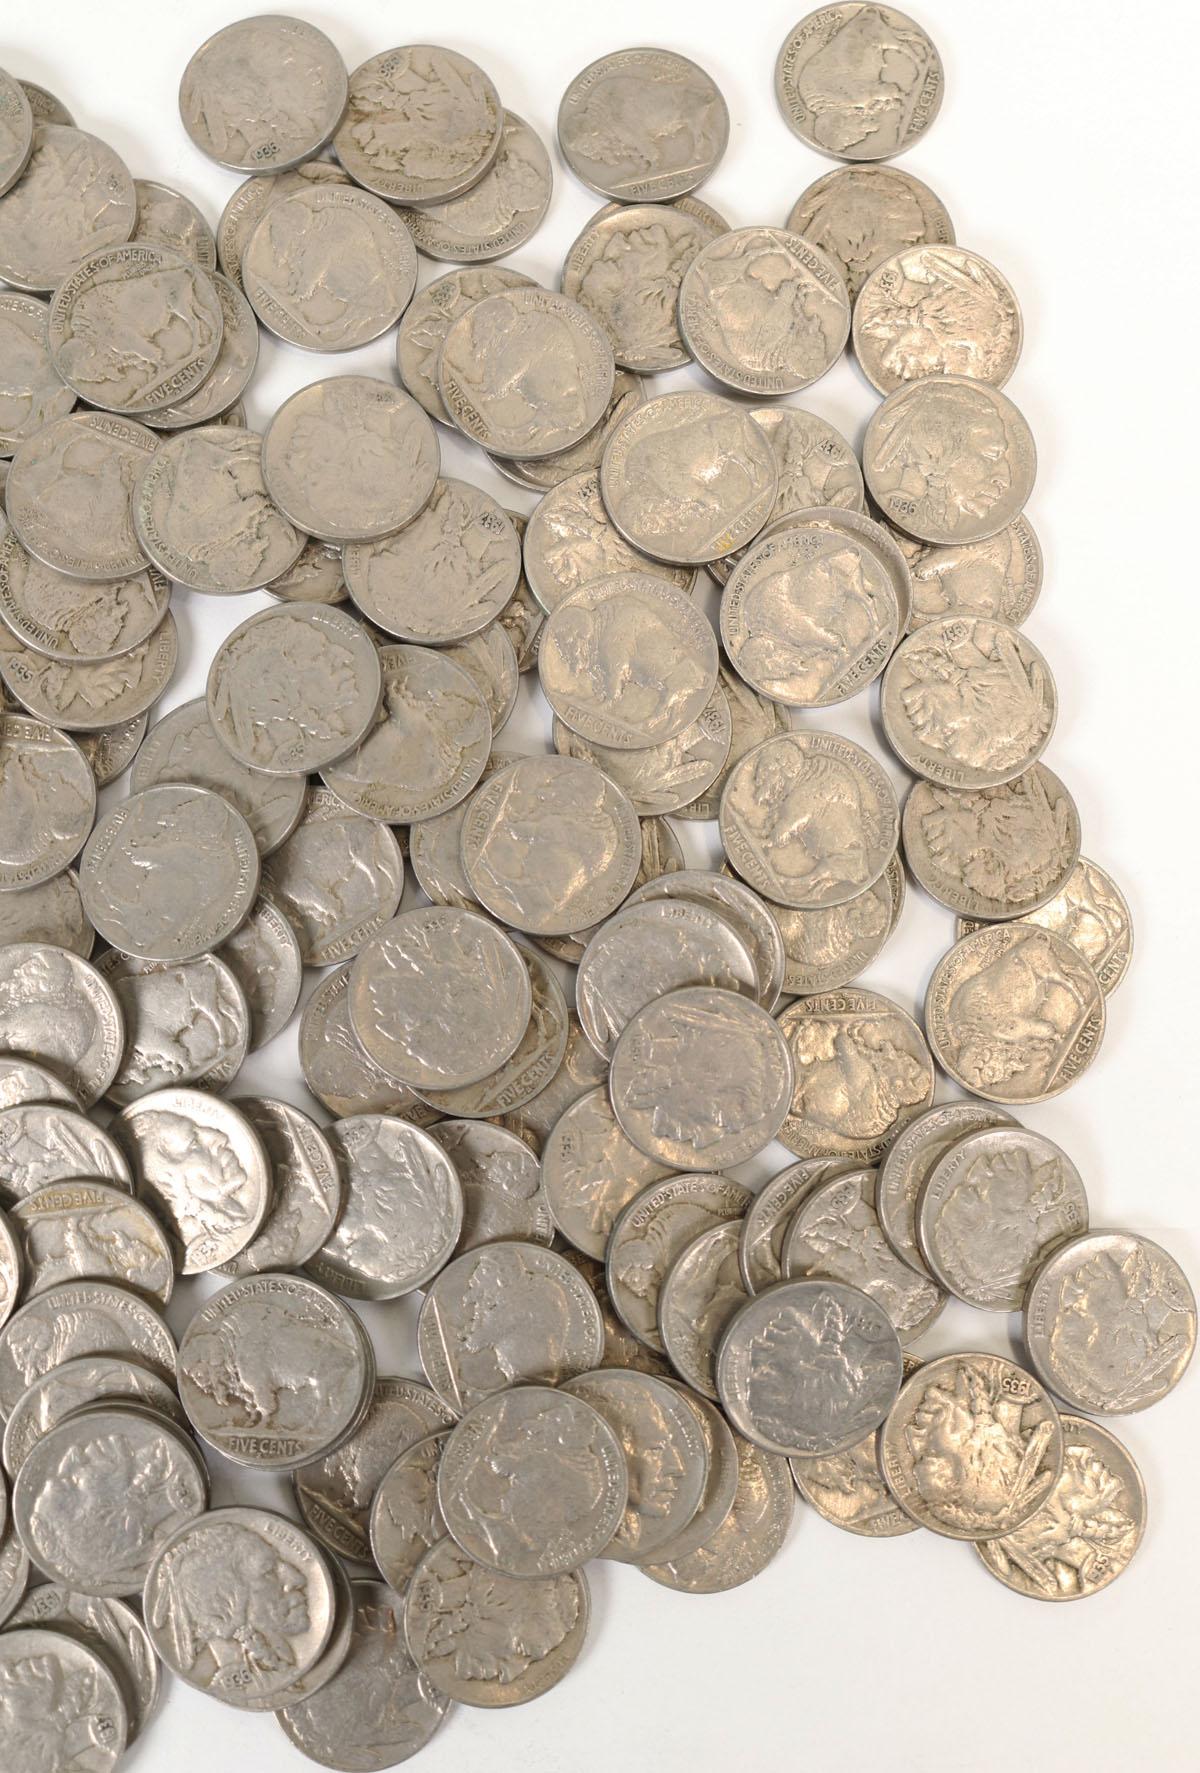 Small Bag of Buffalo Nickels, Various Dates